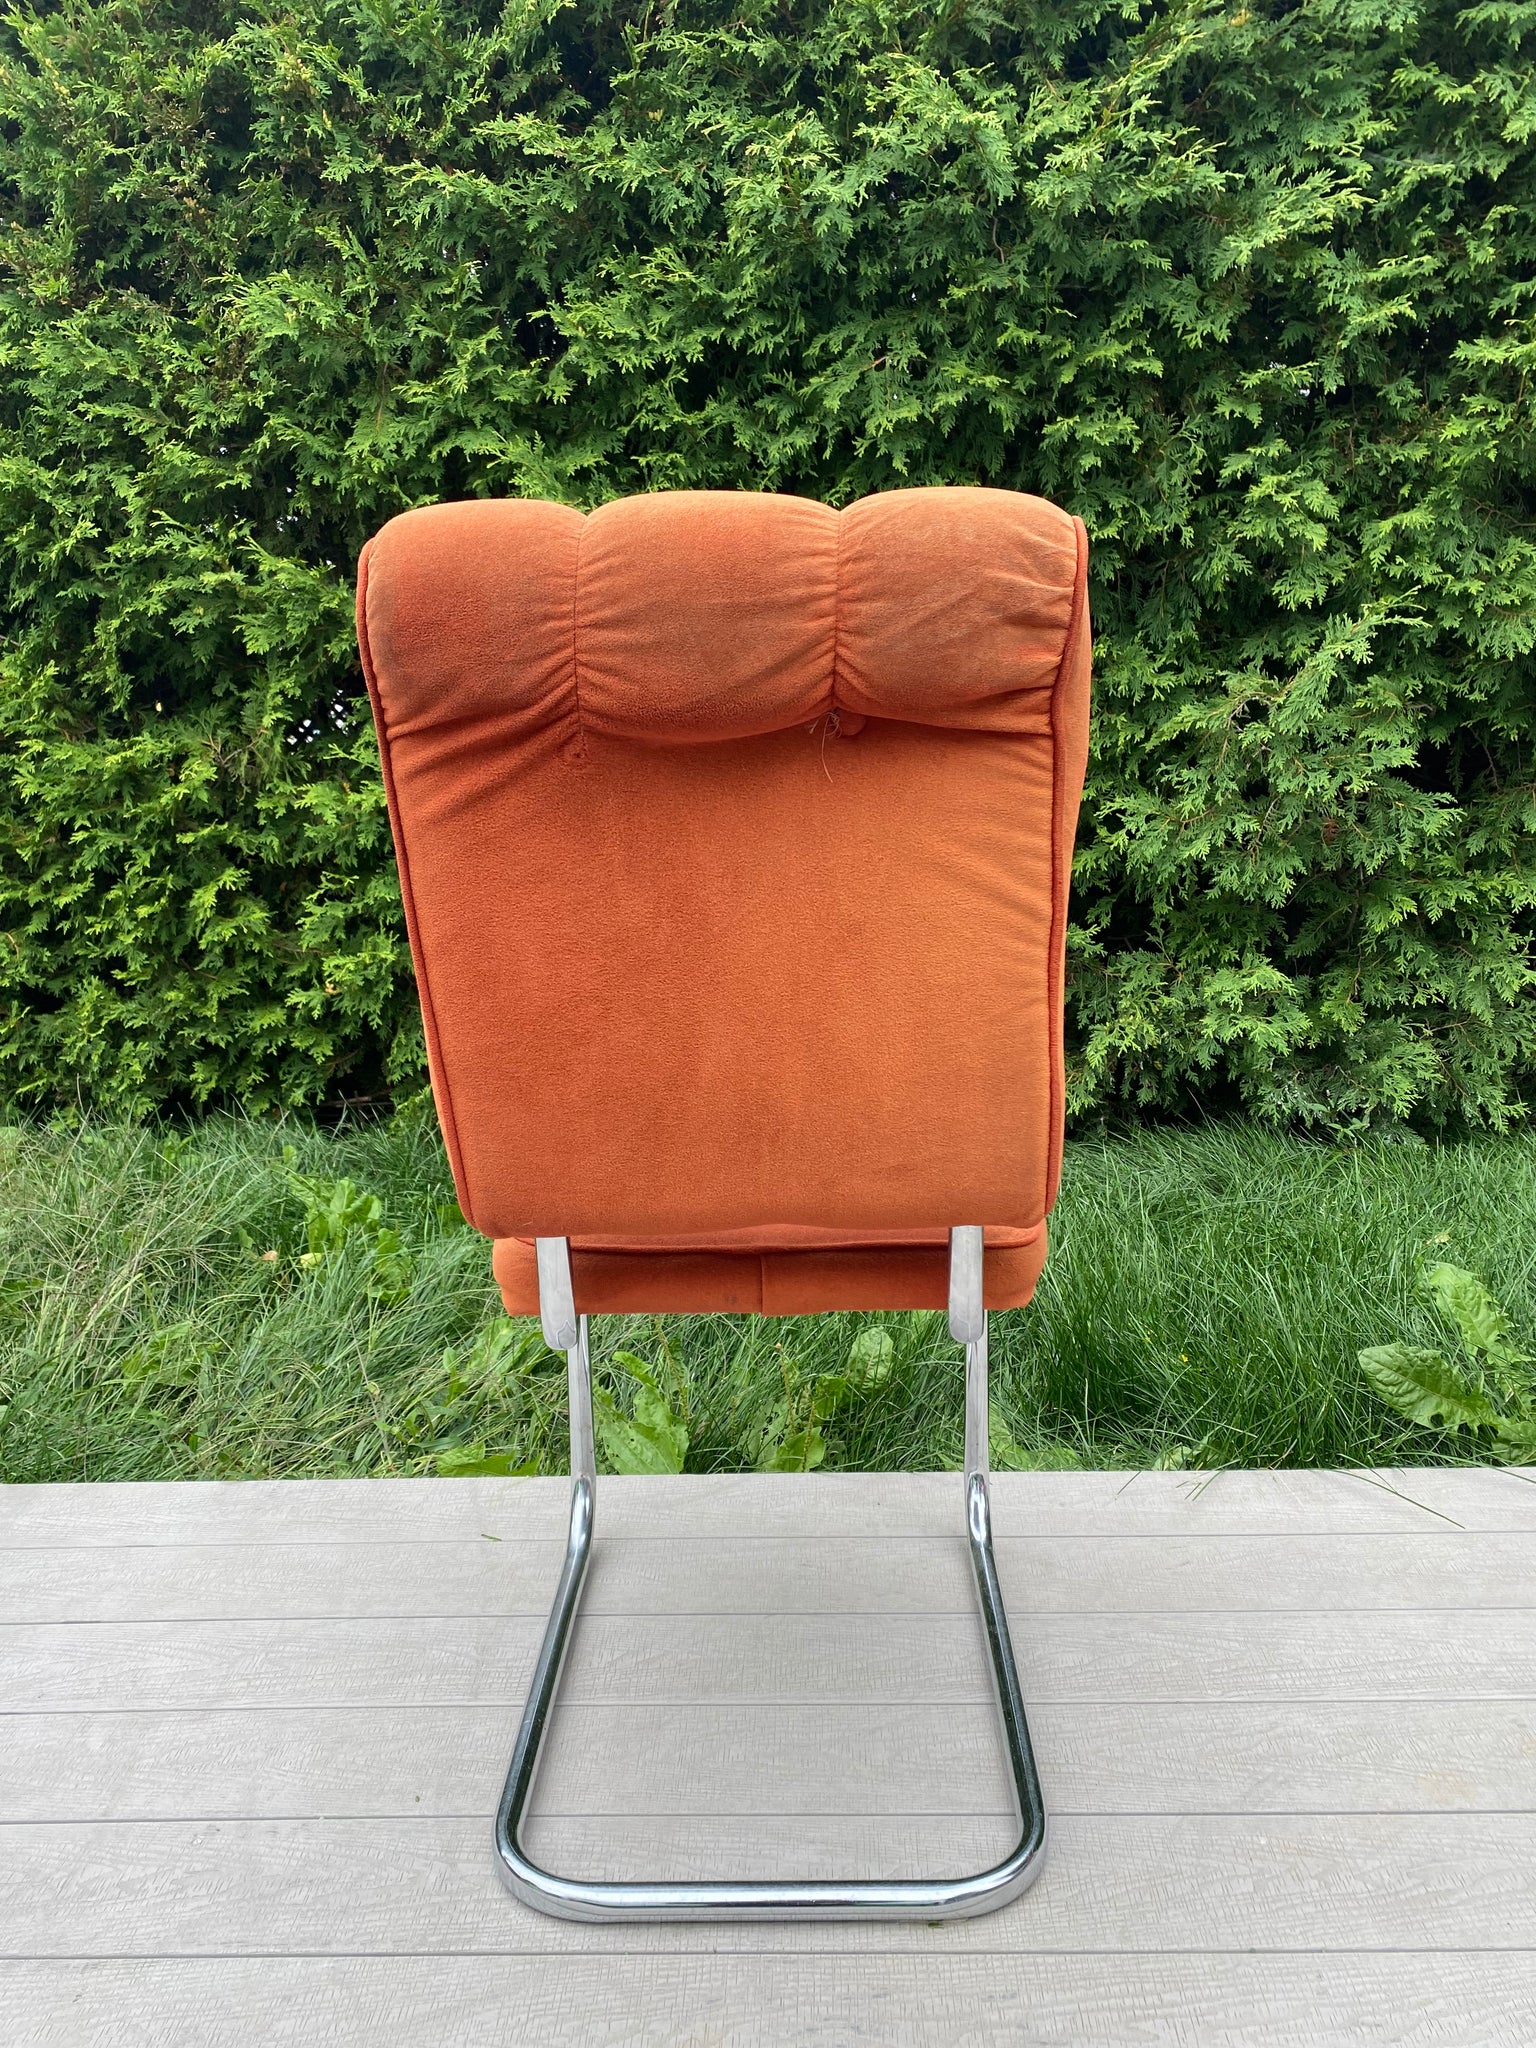 Burnt orange velour & chrome cantilever chairs